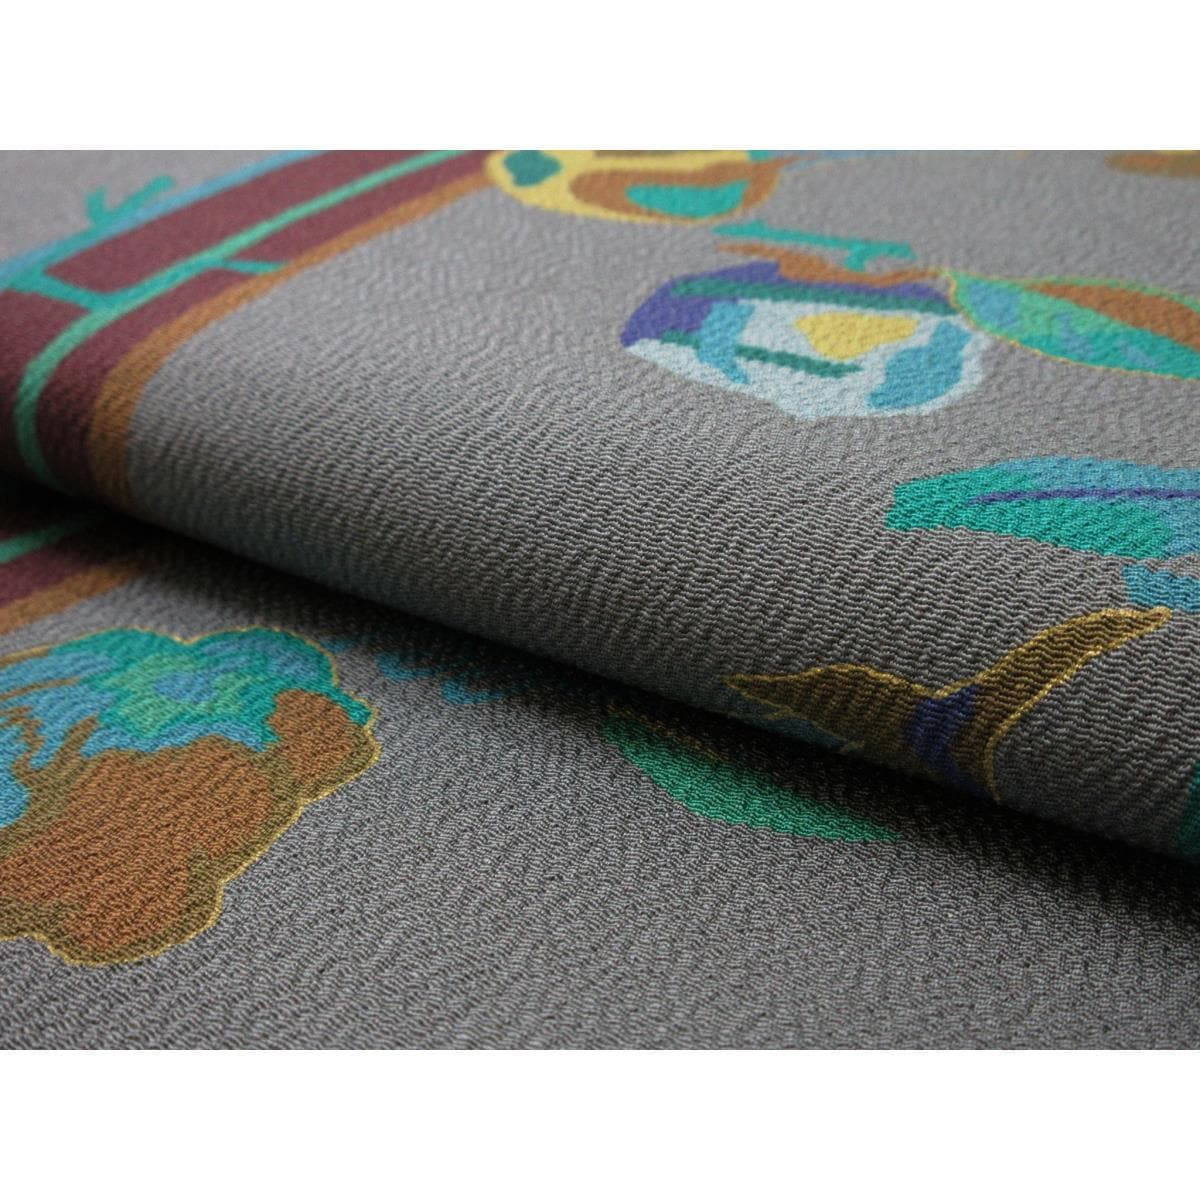 Nagoya obi crepe dyed obi full pattern